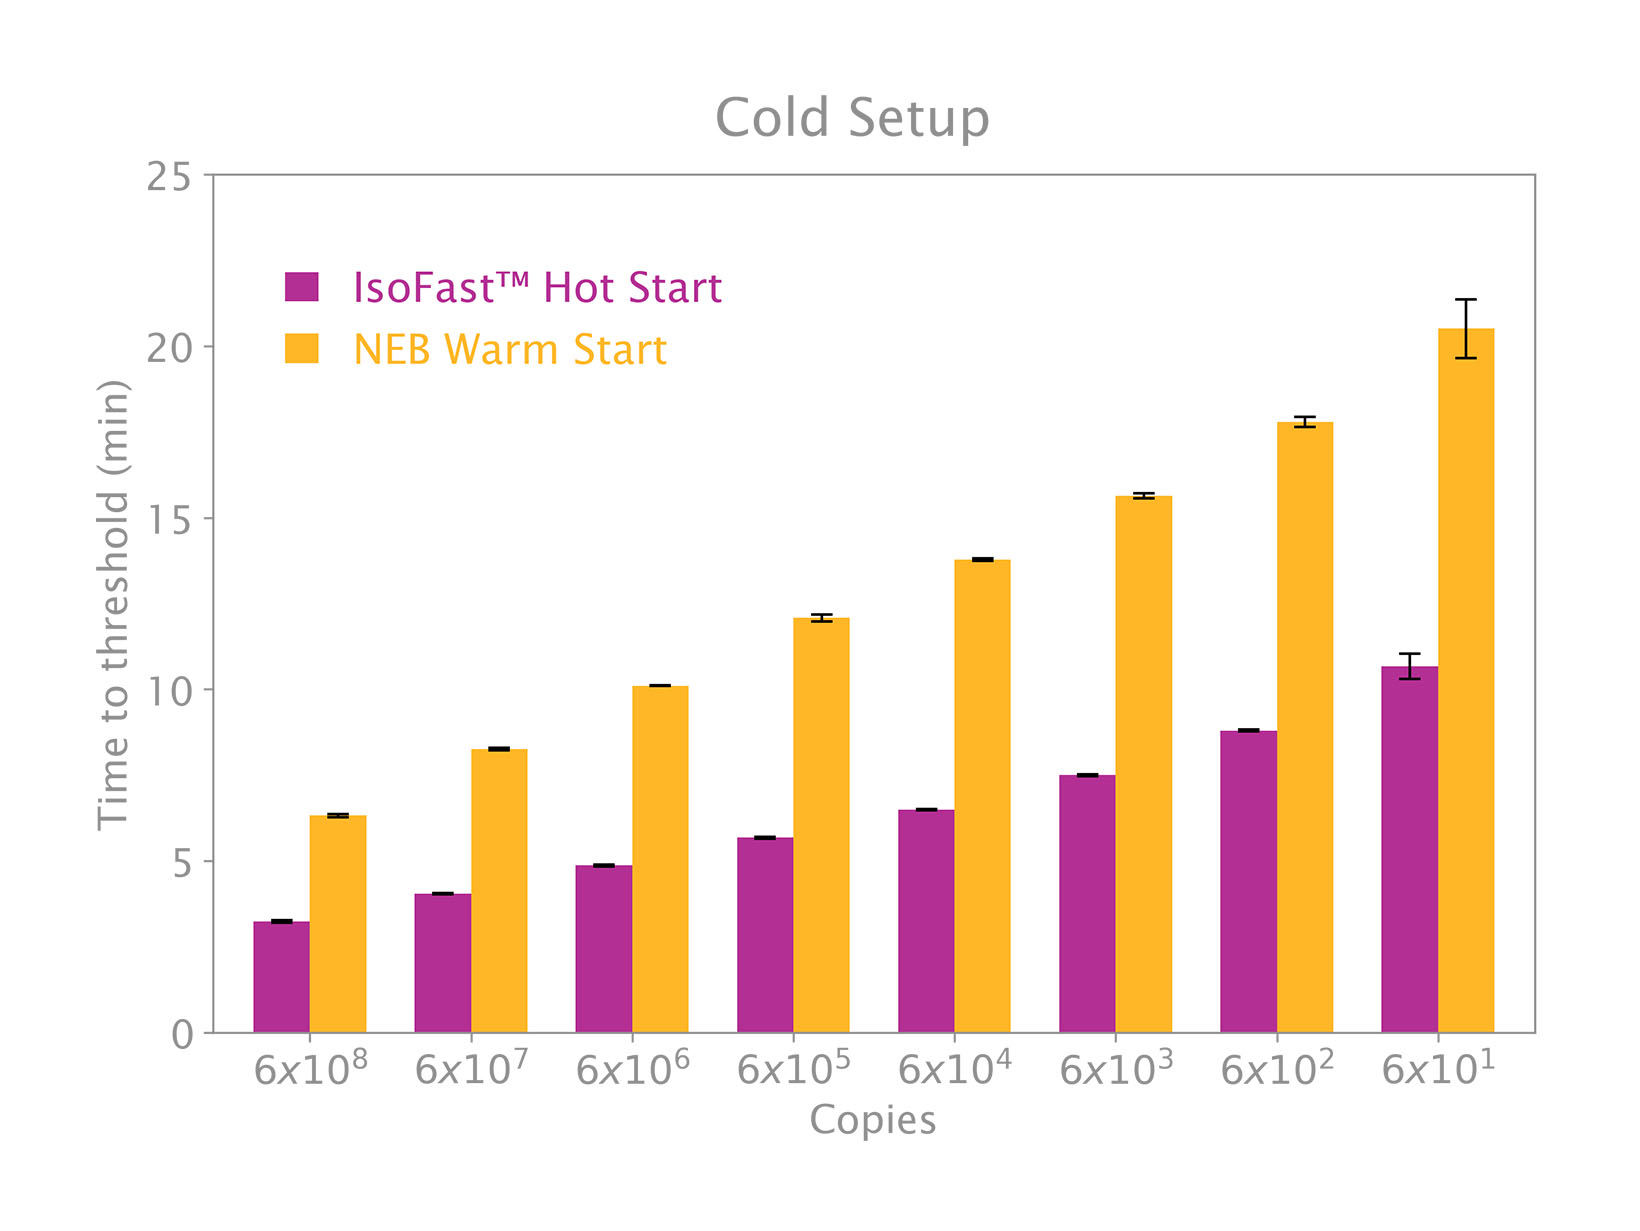 IsoFast Hot Start vs NEB Warmstart time to result under cold setup